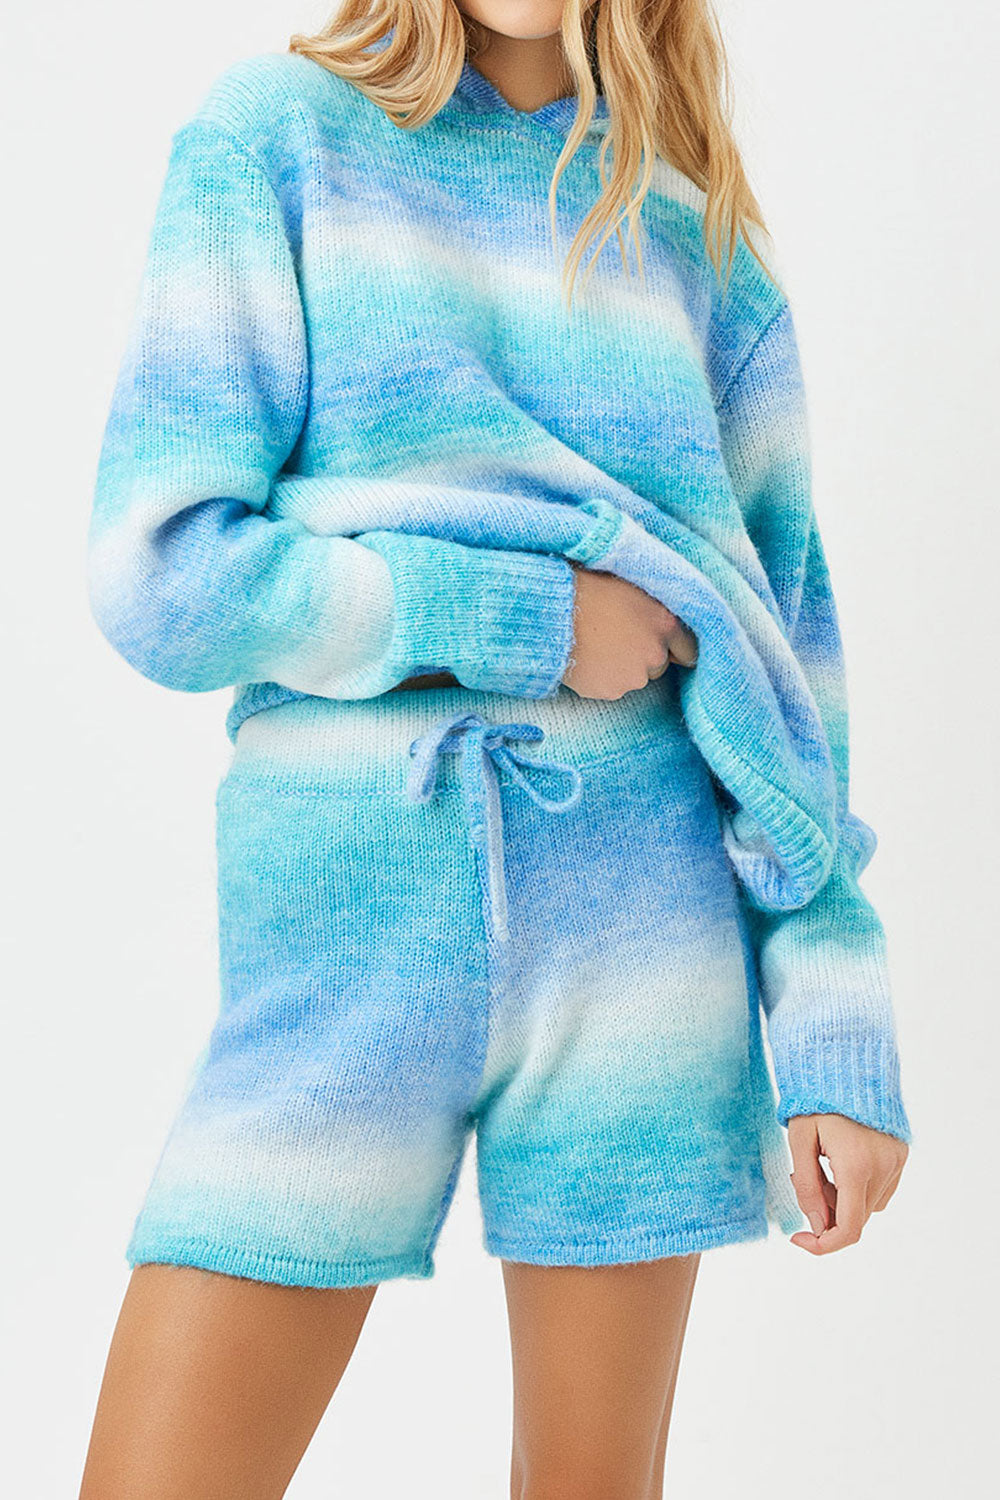 Burl Knit Sweat Short - Blue Horizon